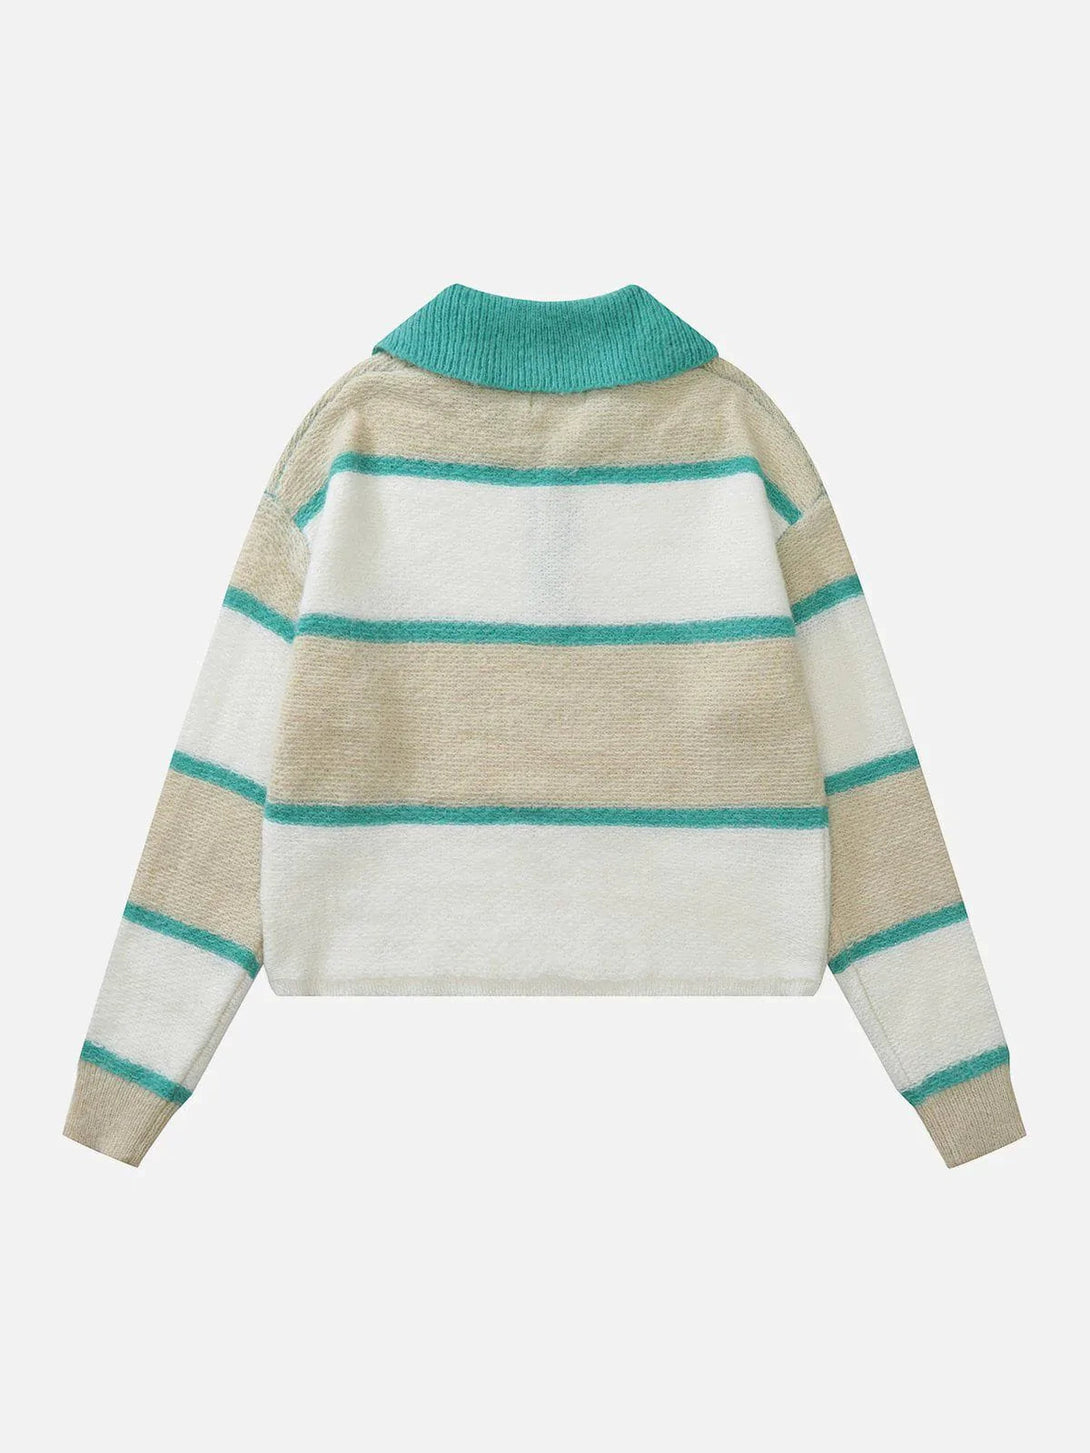 Majesda® - Stripe Polo Collar Sweater outfit ideas streetwear fashion